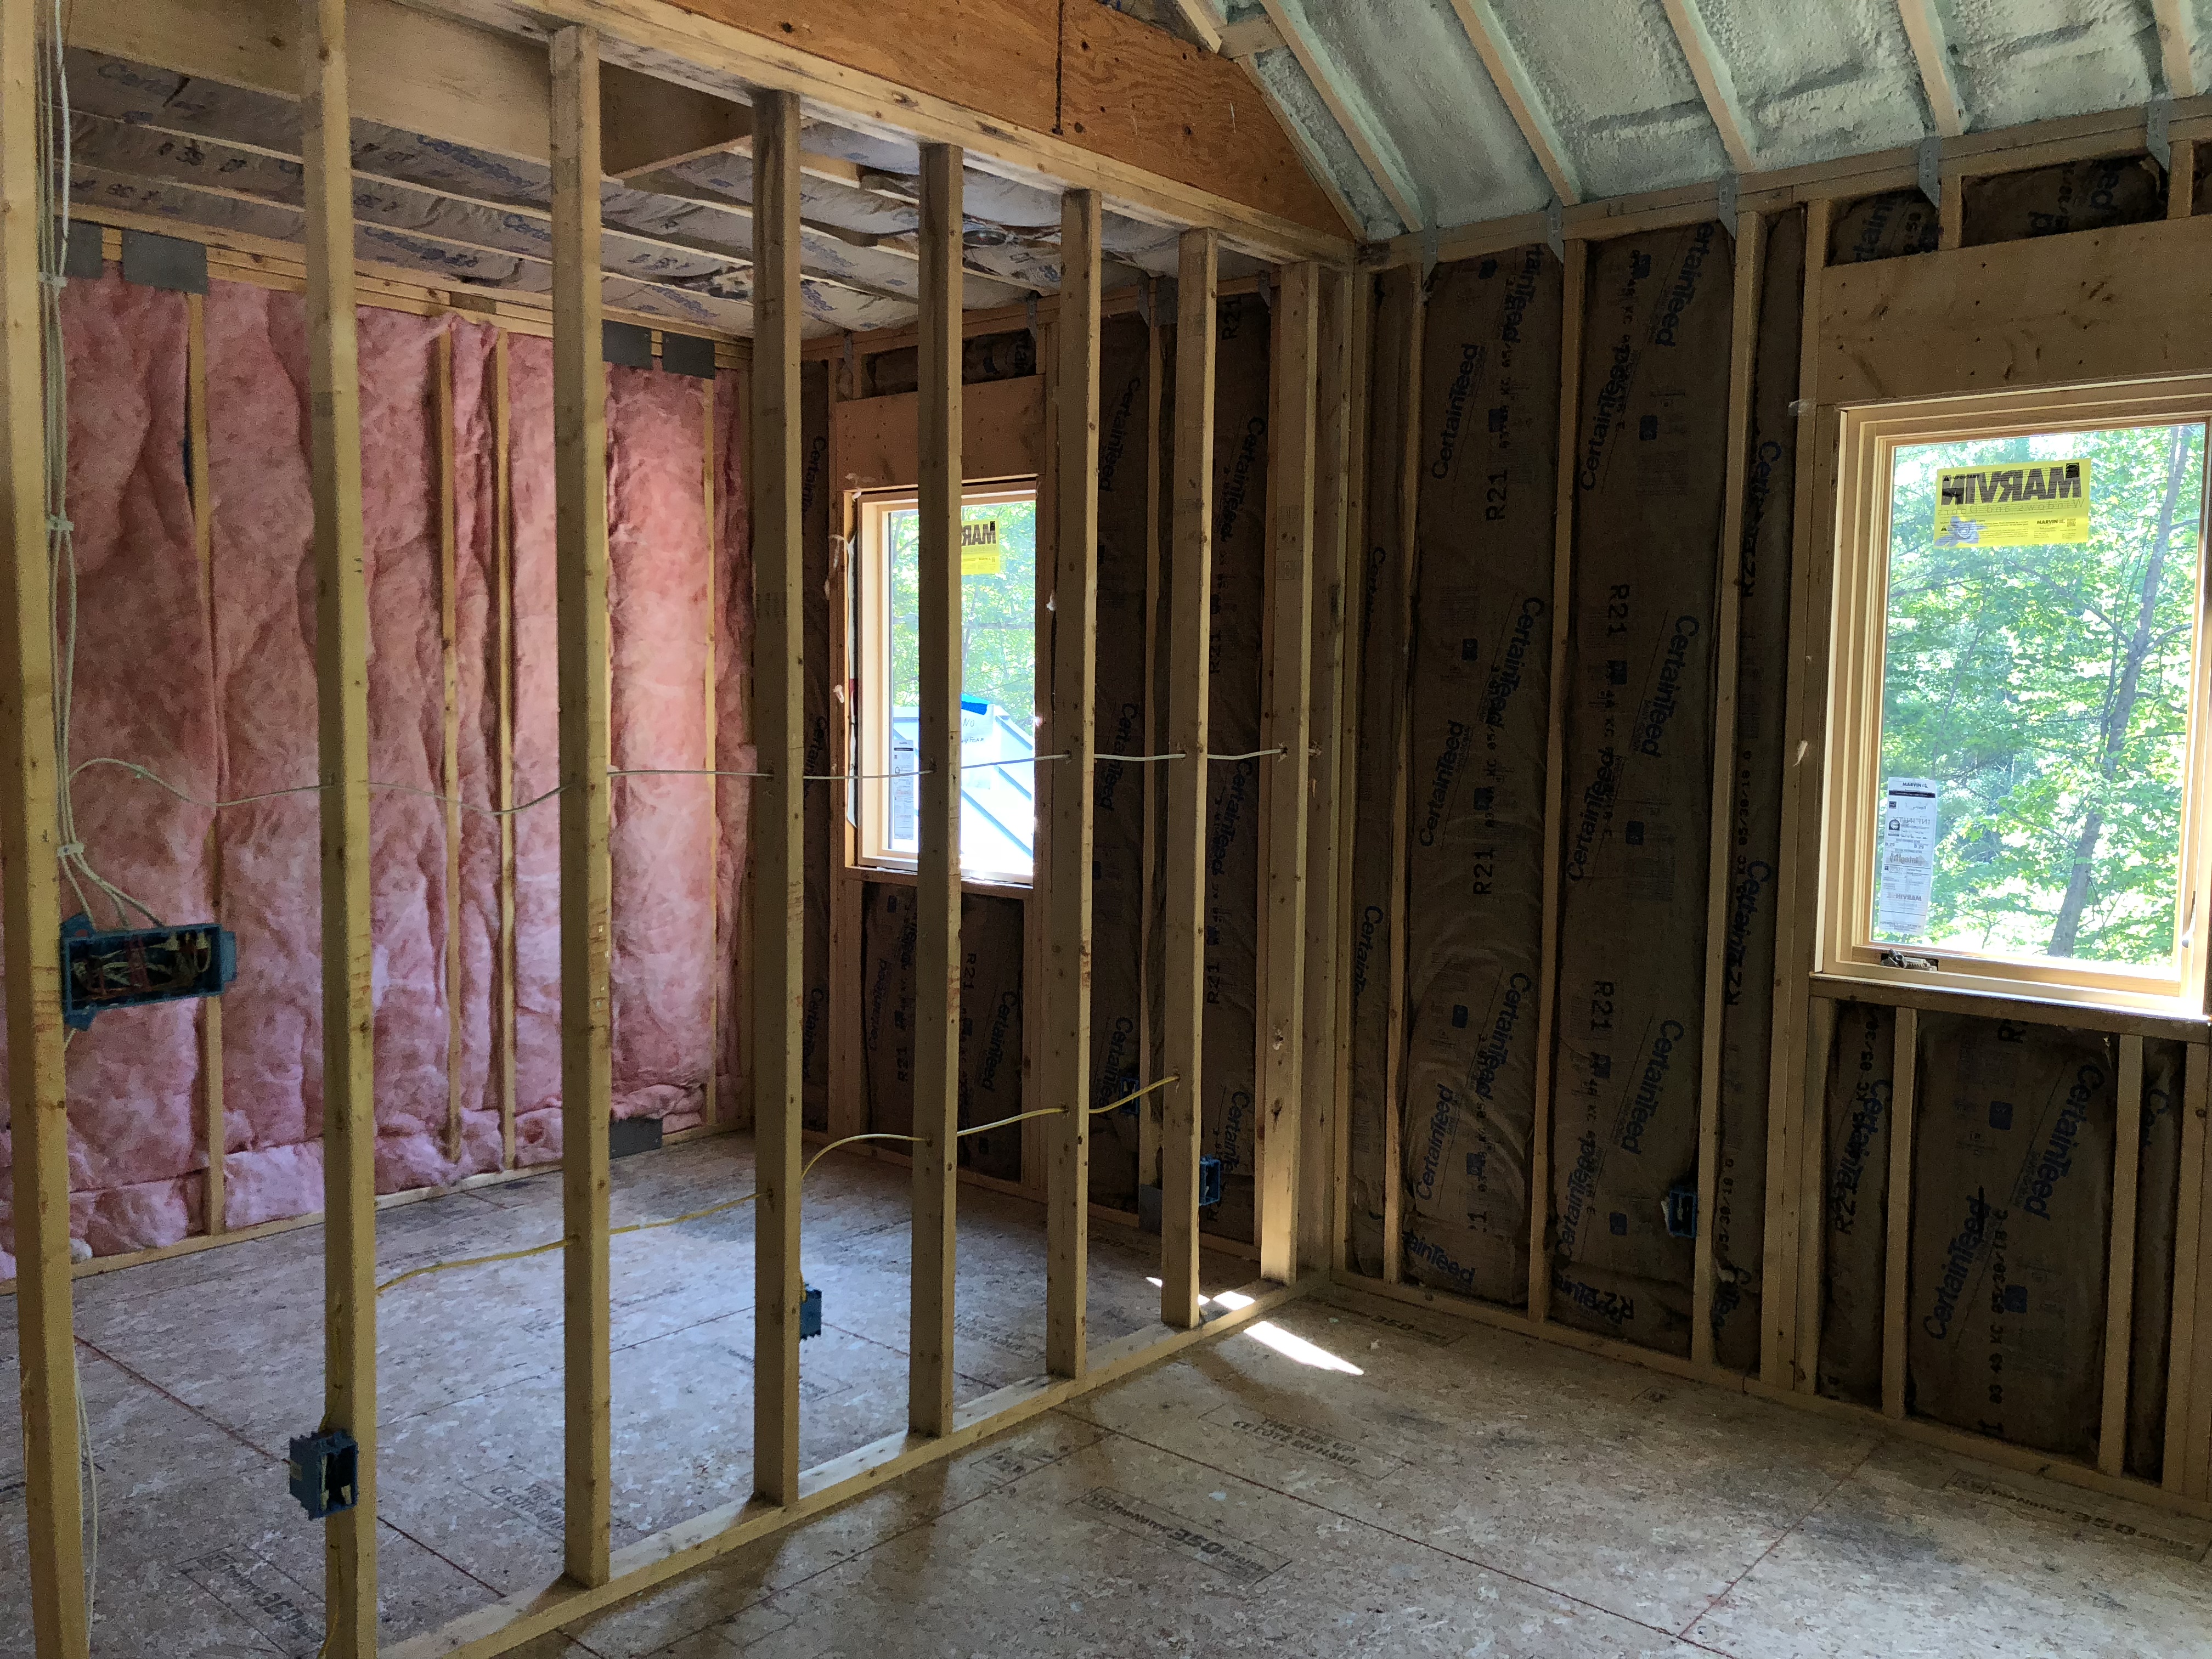 Construction Update: July 2018 - Chalet Perche